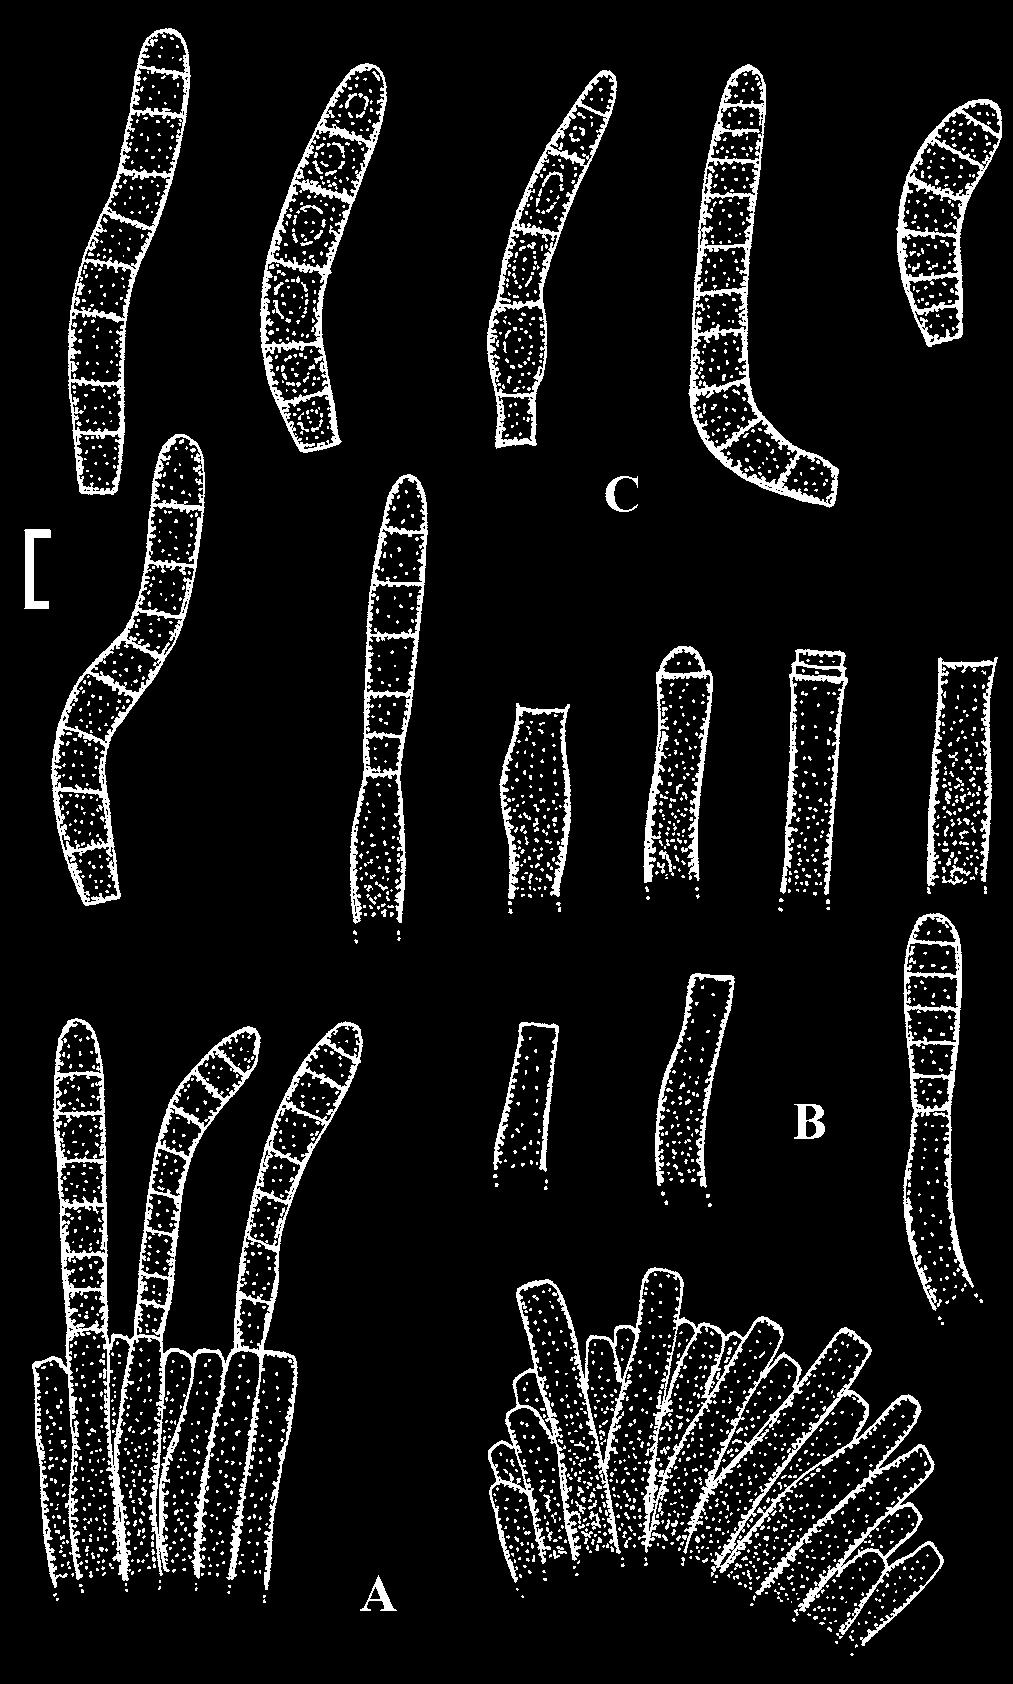 Cercosporoid fungi 1 a b Fig. 66. Pseudocercospora sciadopytios (TFM:FPI-4757). a. Conidium (light microscopy). b. Conidiophore fascicle (light microscopy). Bars = 5 µm (a) and 10 µm (b).